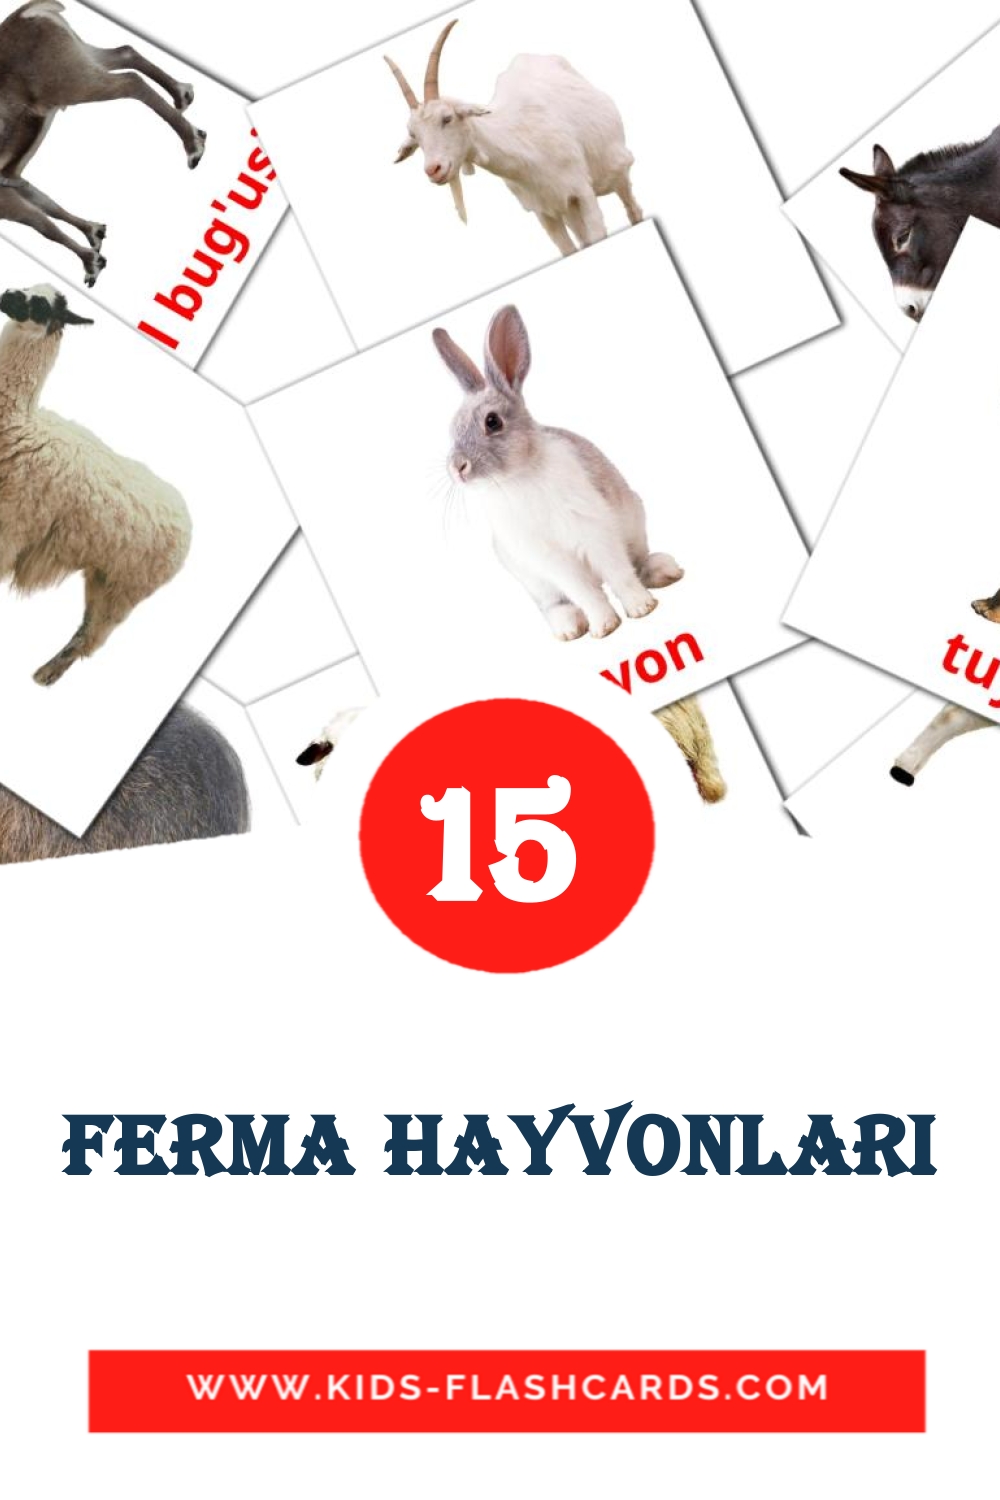 Ferma hayvonlari на узбекском для Детского Сада (15 карточек)